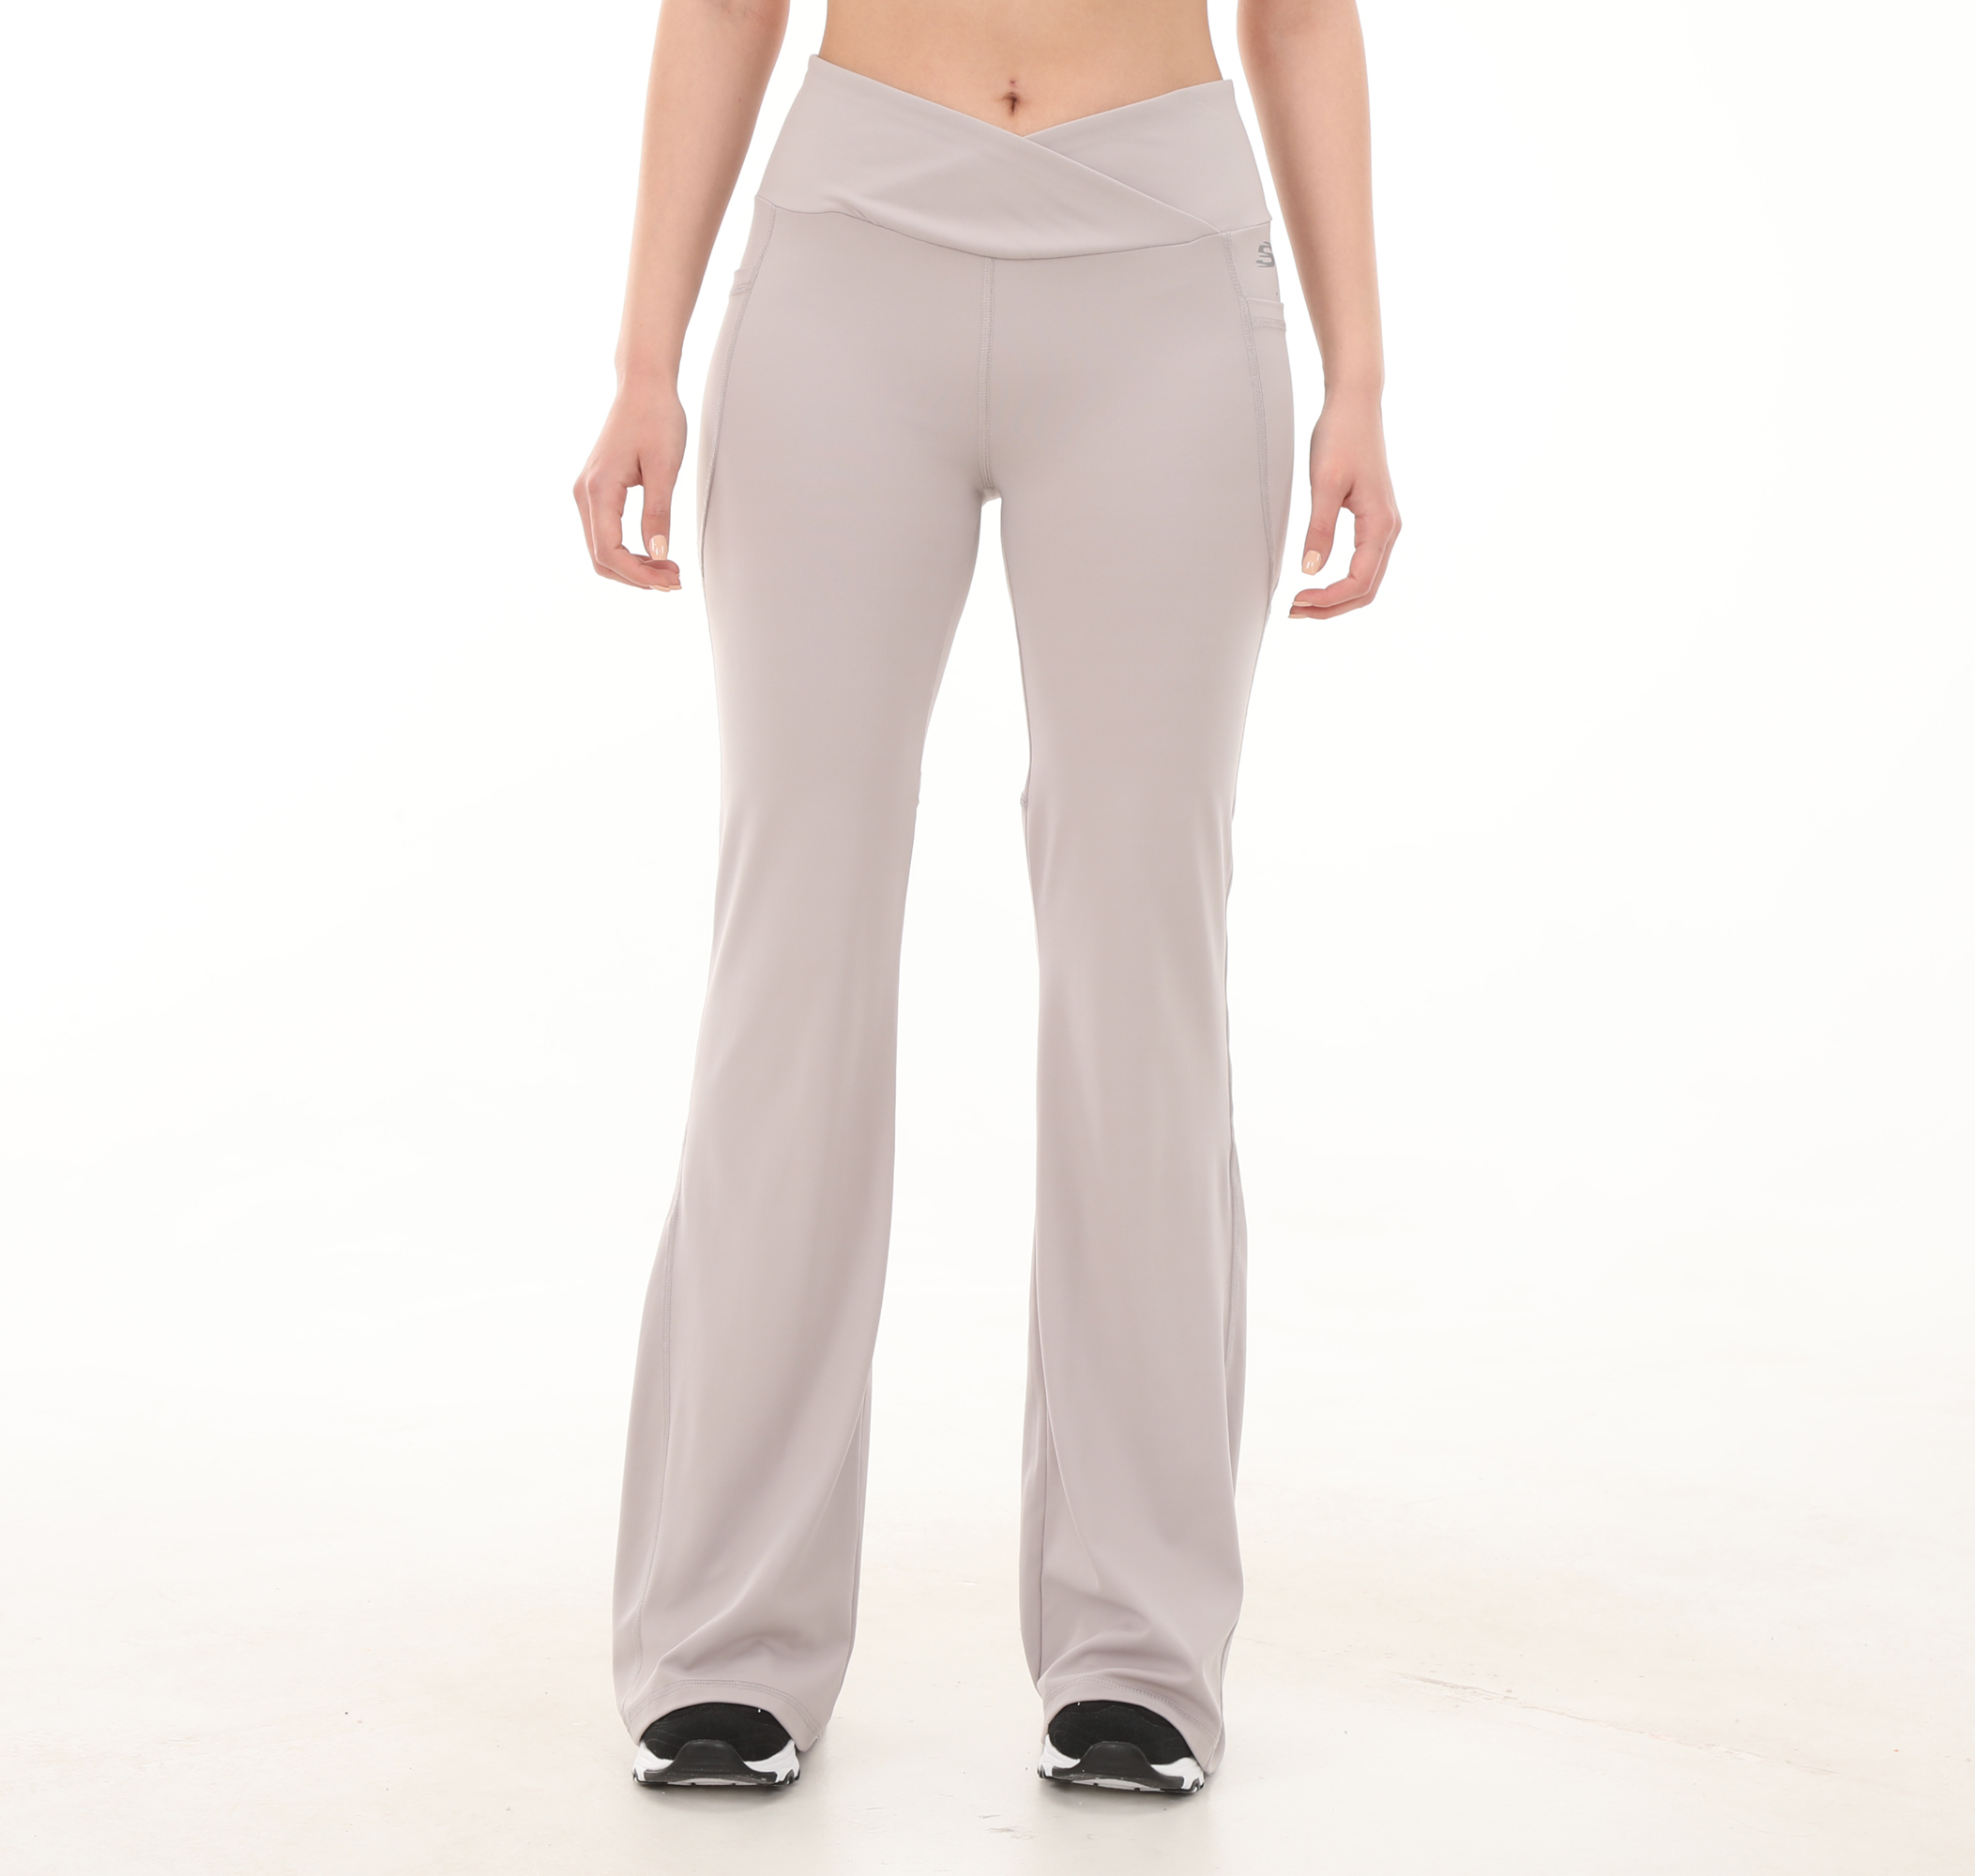 Женские спортивные штаны Skechers Performance Coll. W Yoga Pant